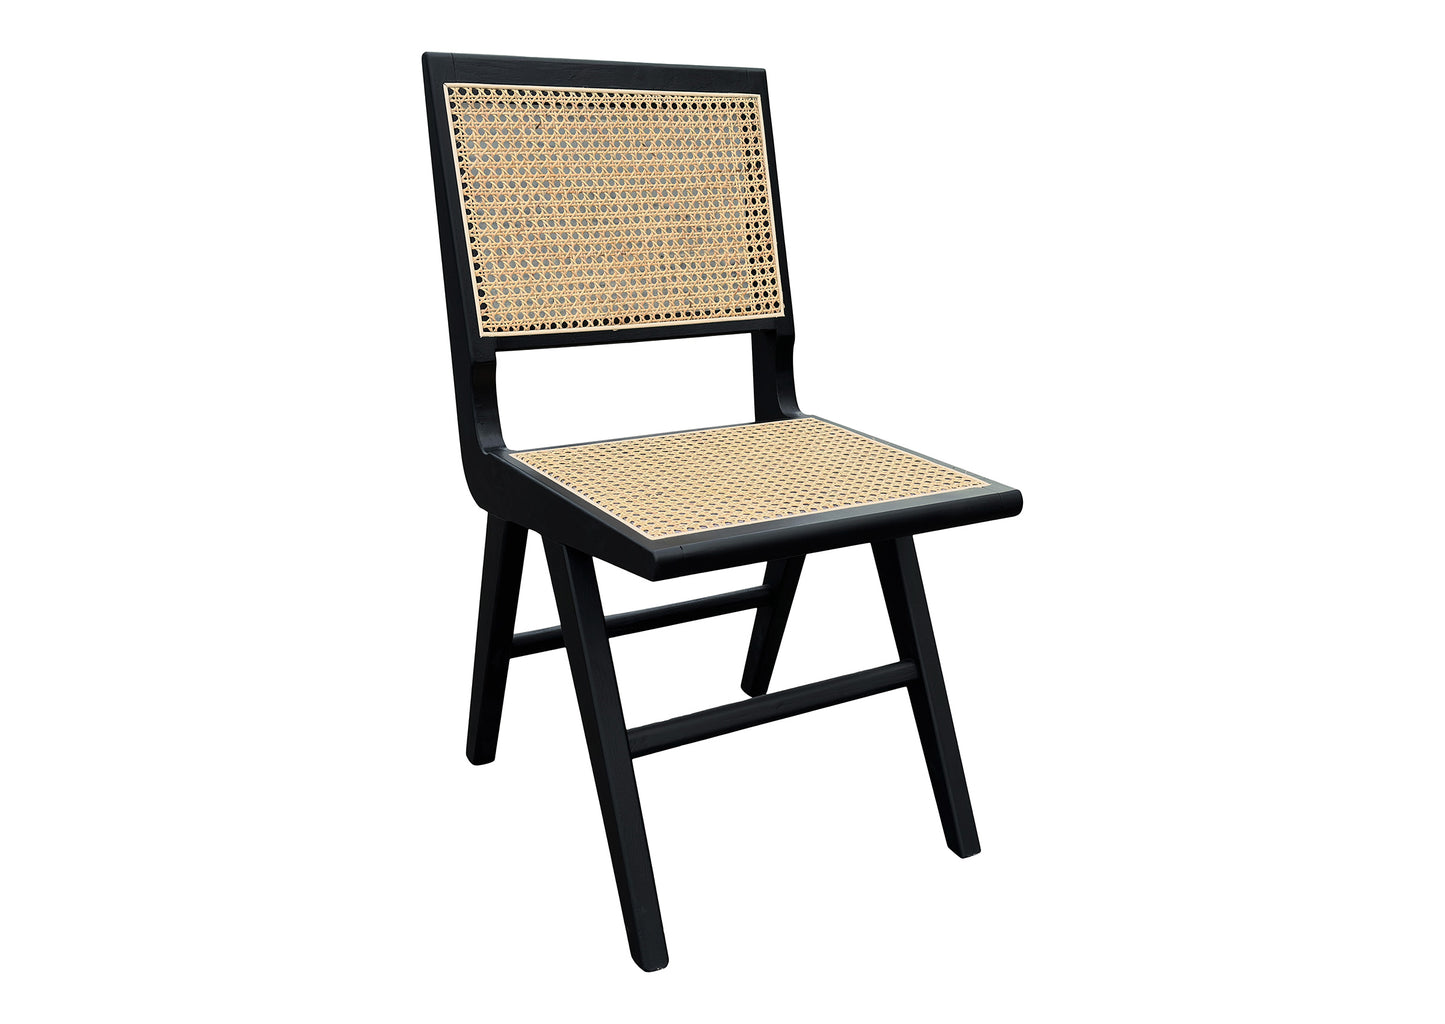 Draper Dining Chair - Black